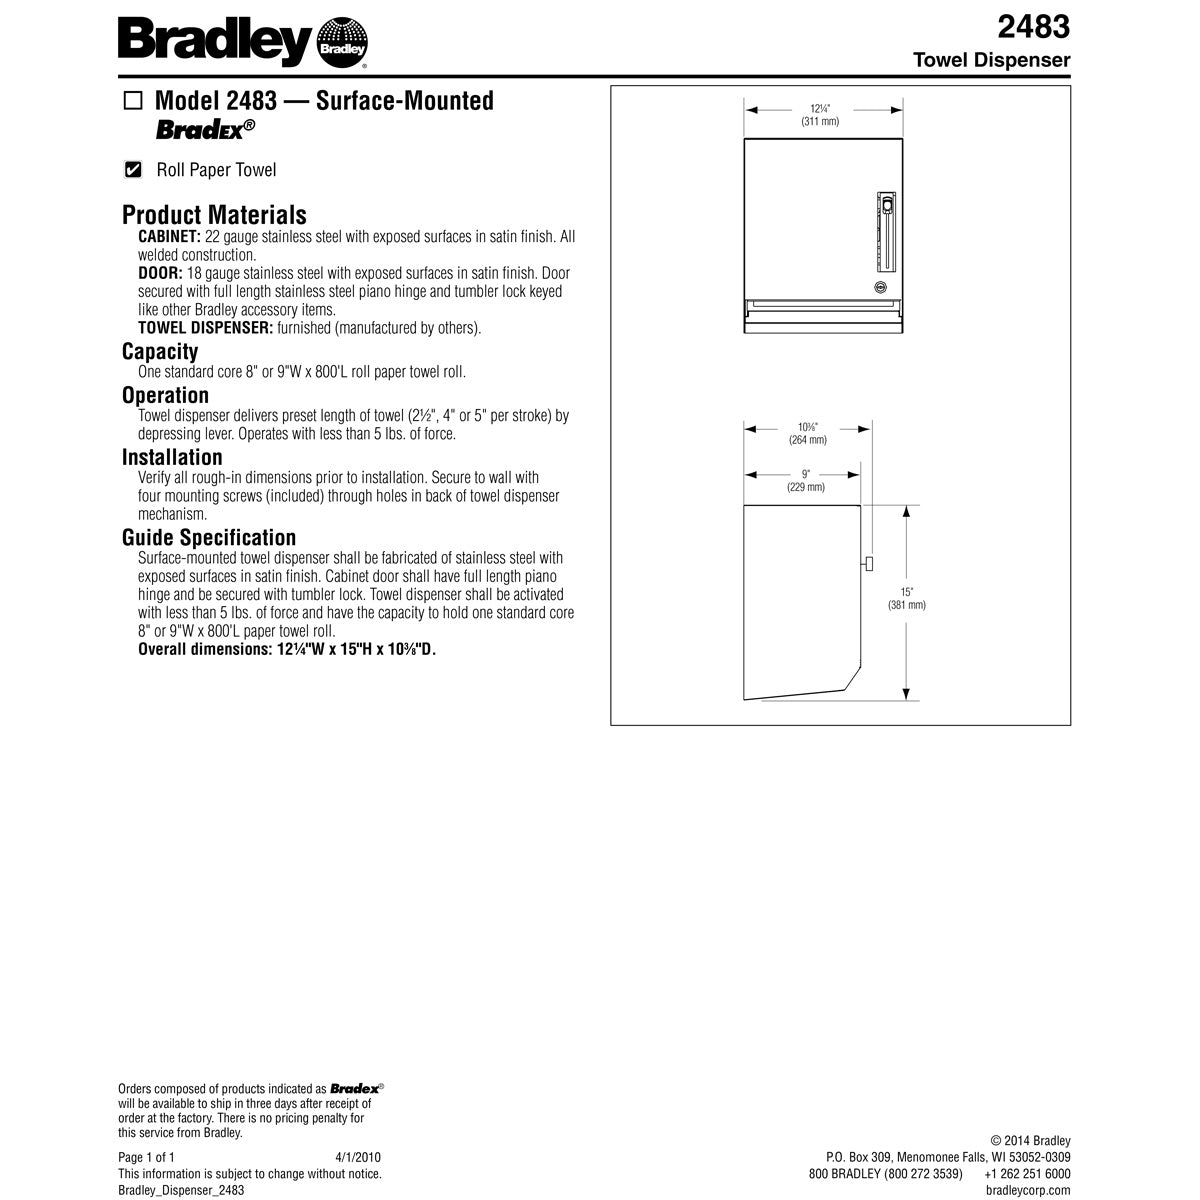 Bradley Towel Dispenser 2483-00 Commercial BX-Paper Towel Dispenser, Surface-Mounted, Stainless Steel